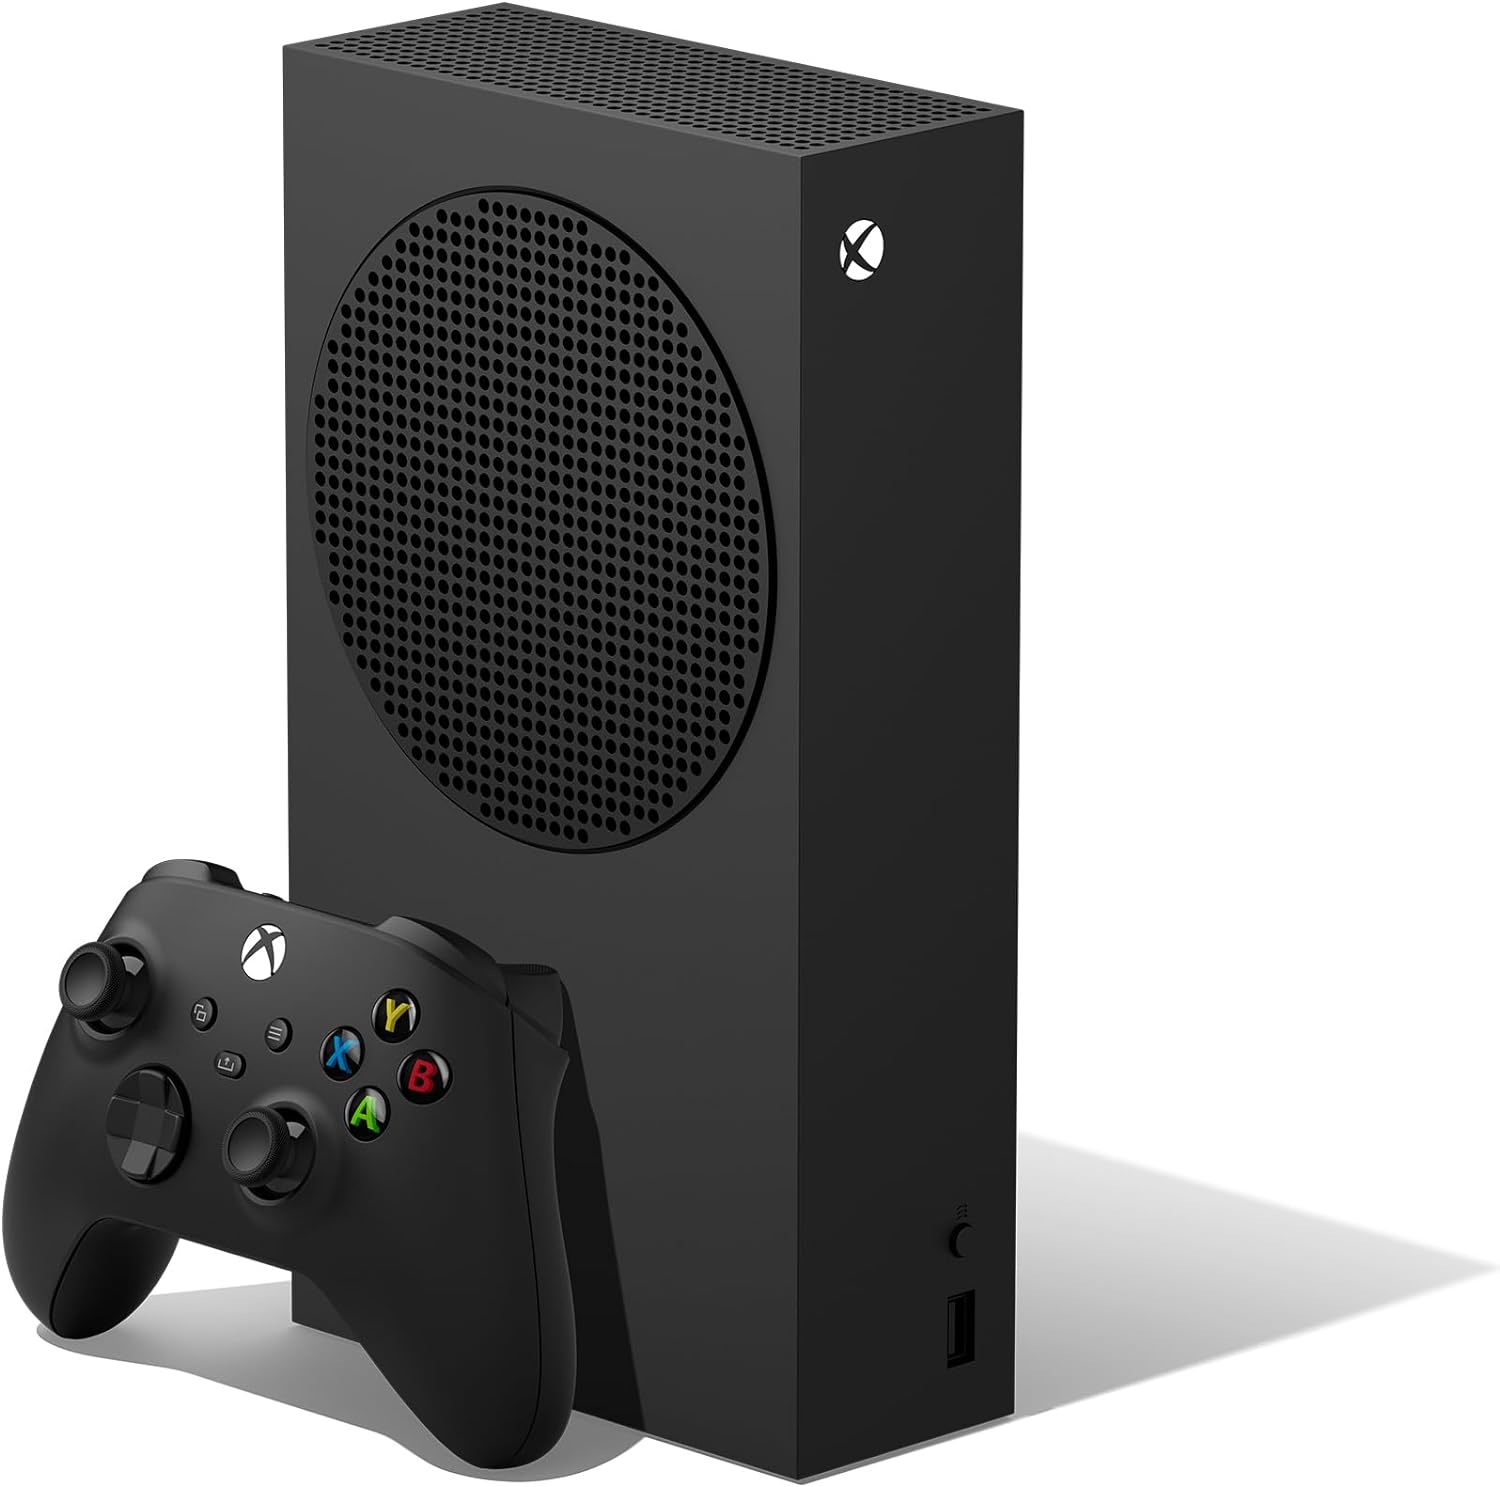 Microsoft XXU00008 Console Xbox Series S 1tb Carbon Black